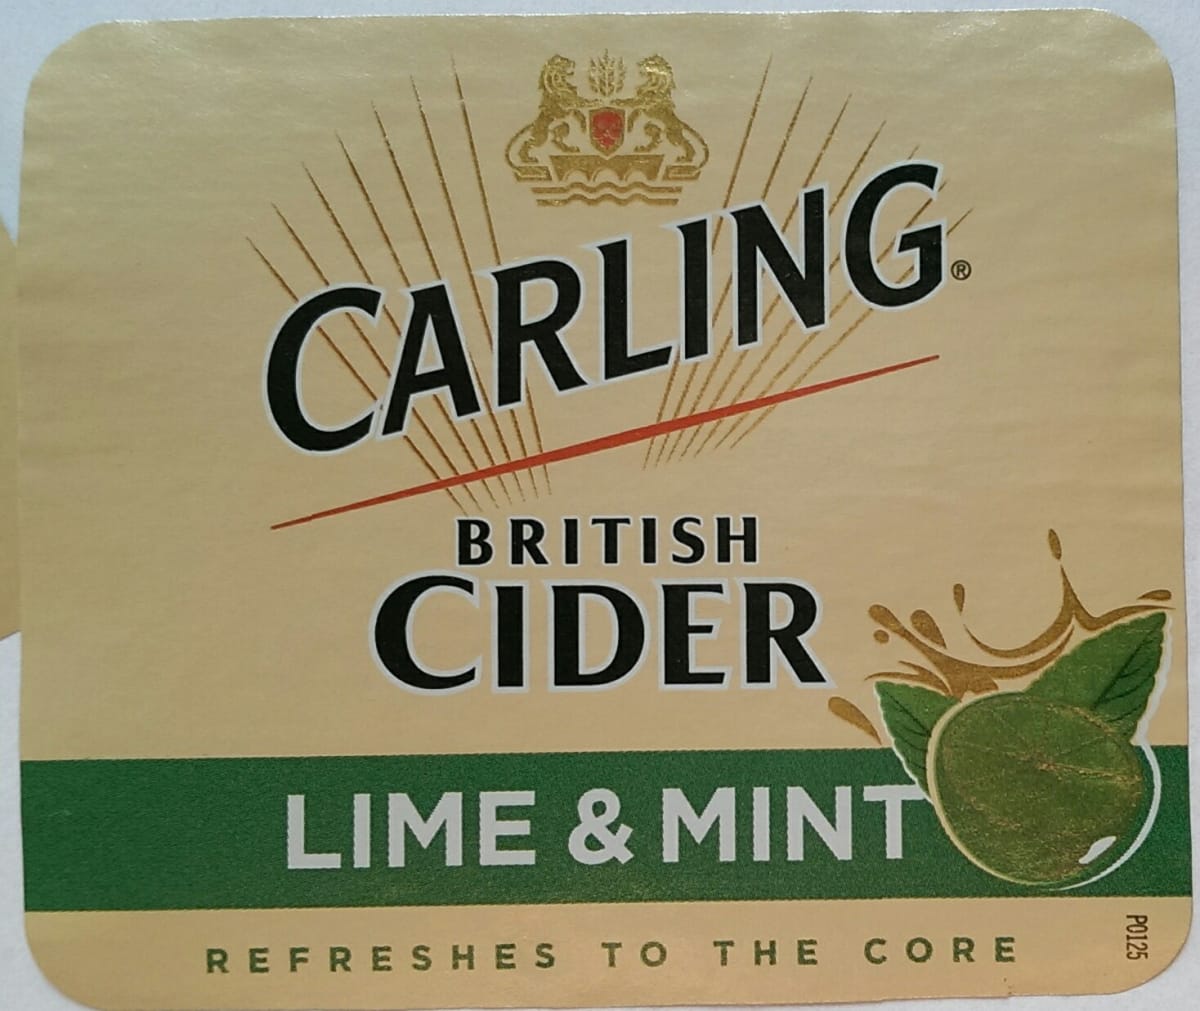 Carling British Cider Lime & Mint